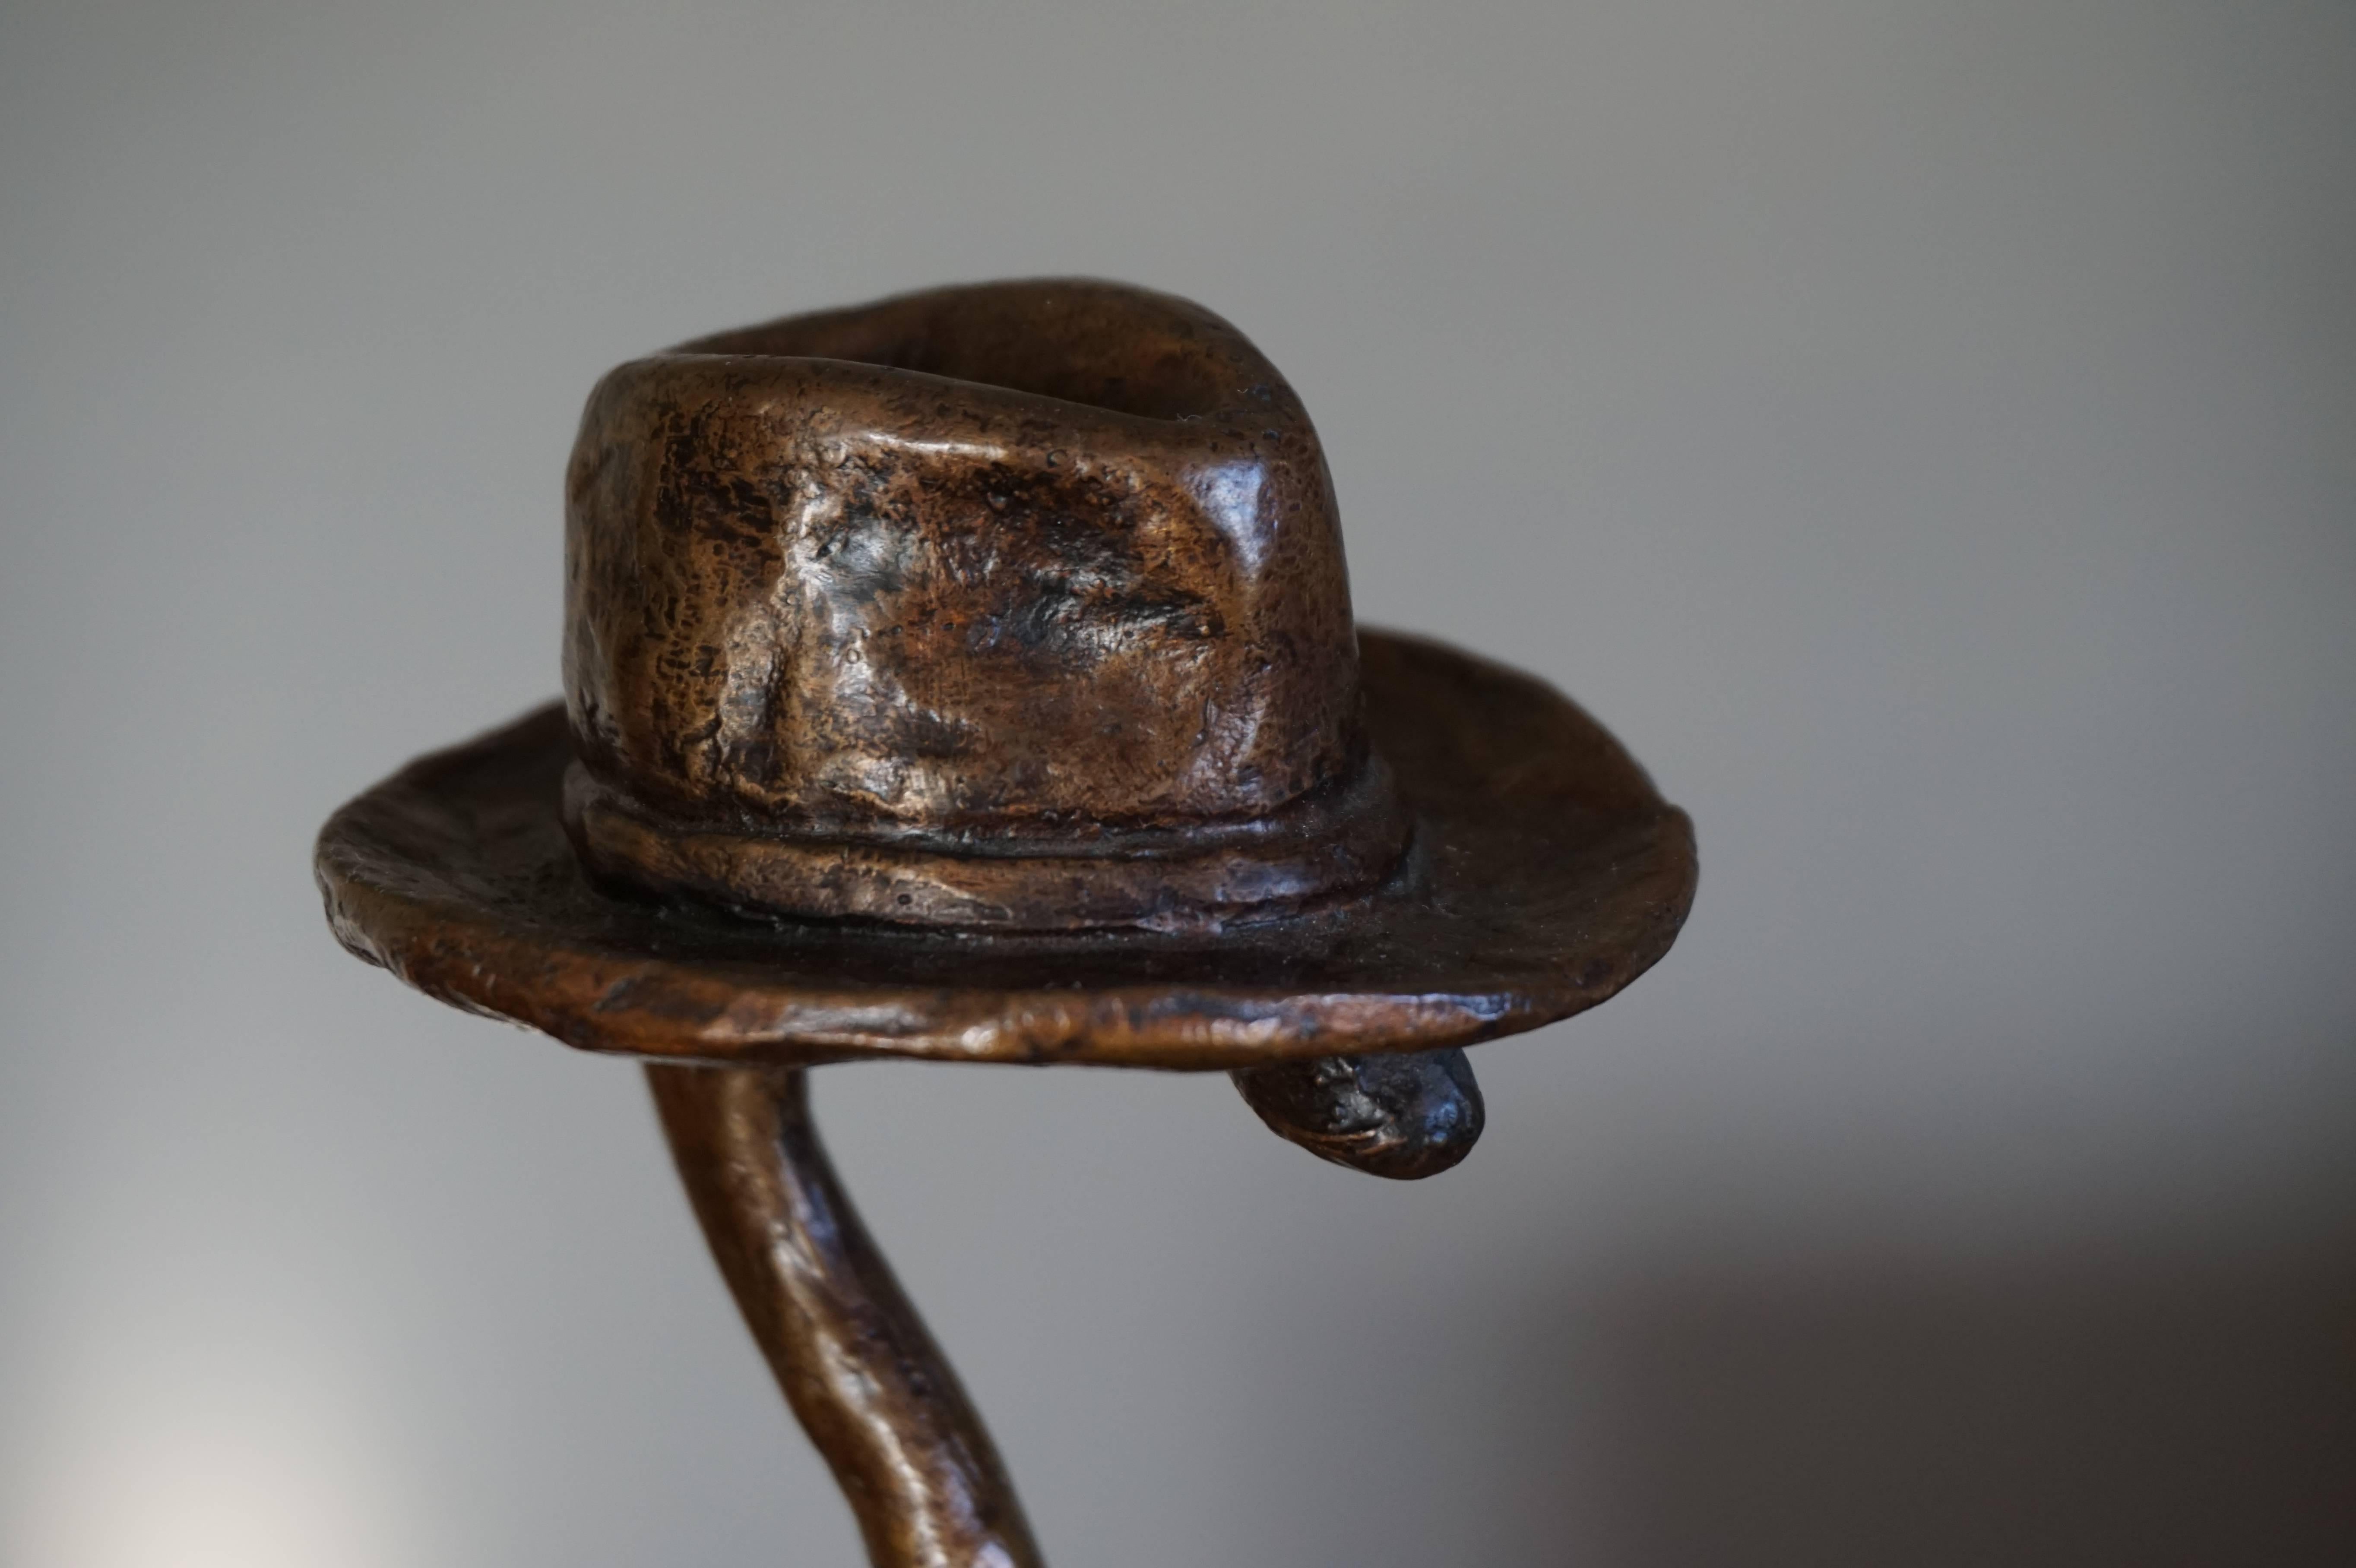 Dutch Unique Bronze Fashion Sculpture of Walking Cane in a Hat with Colar & Tie